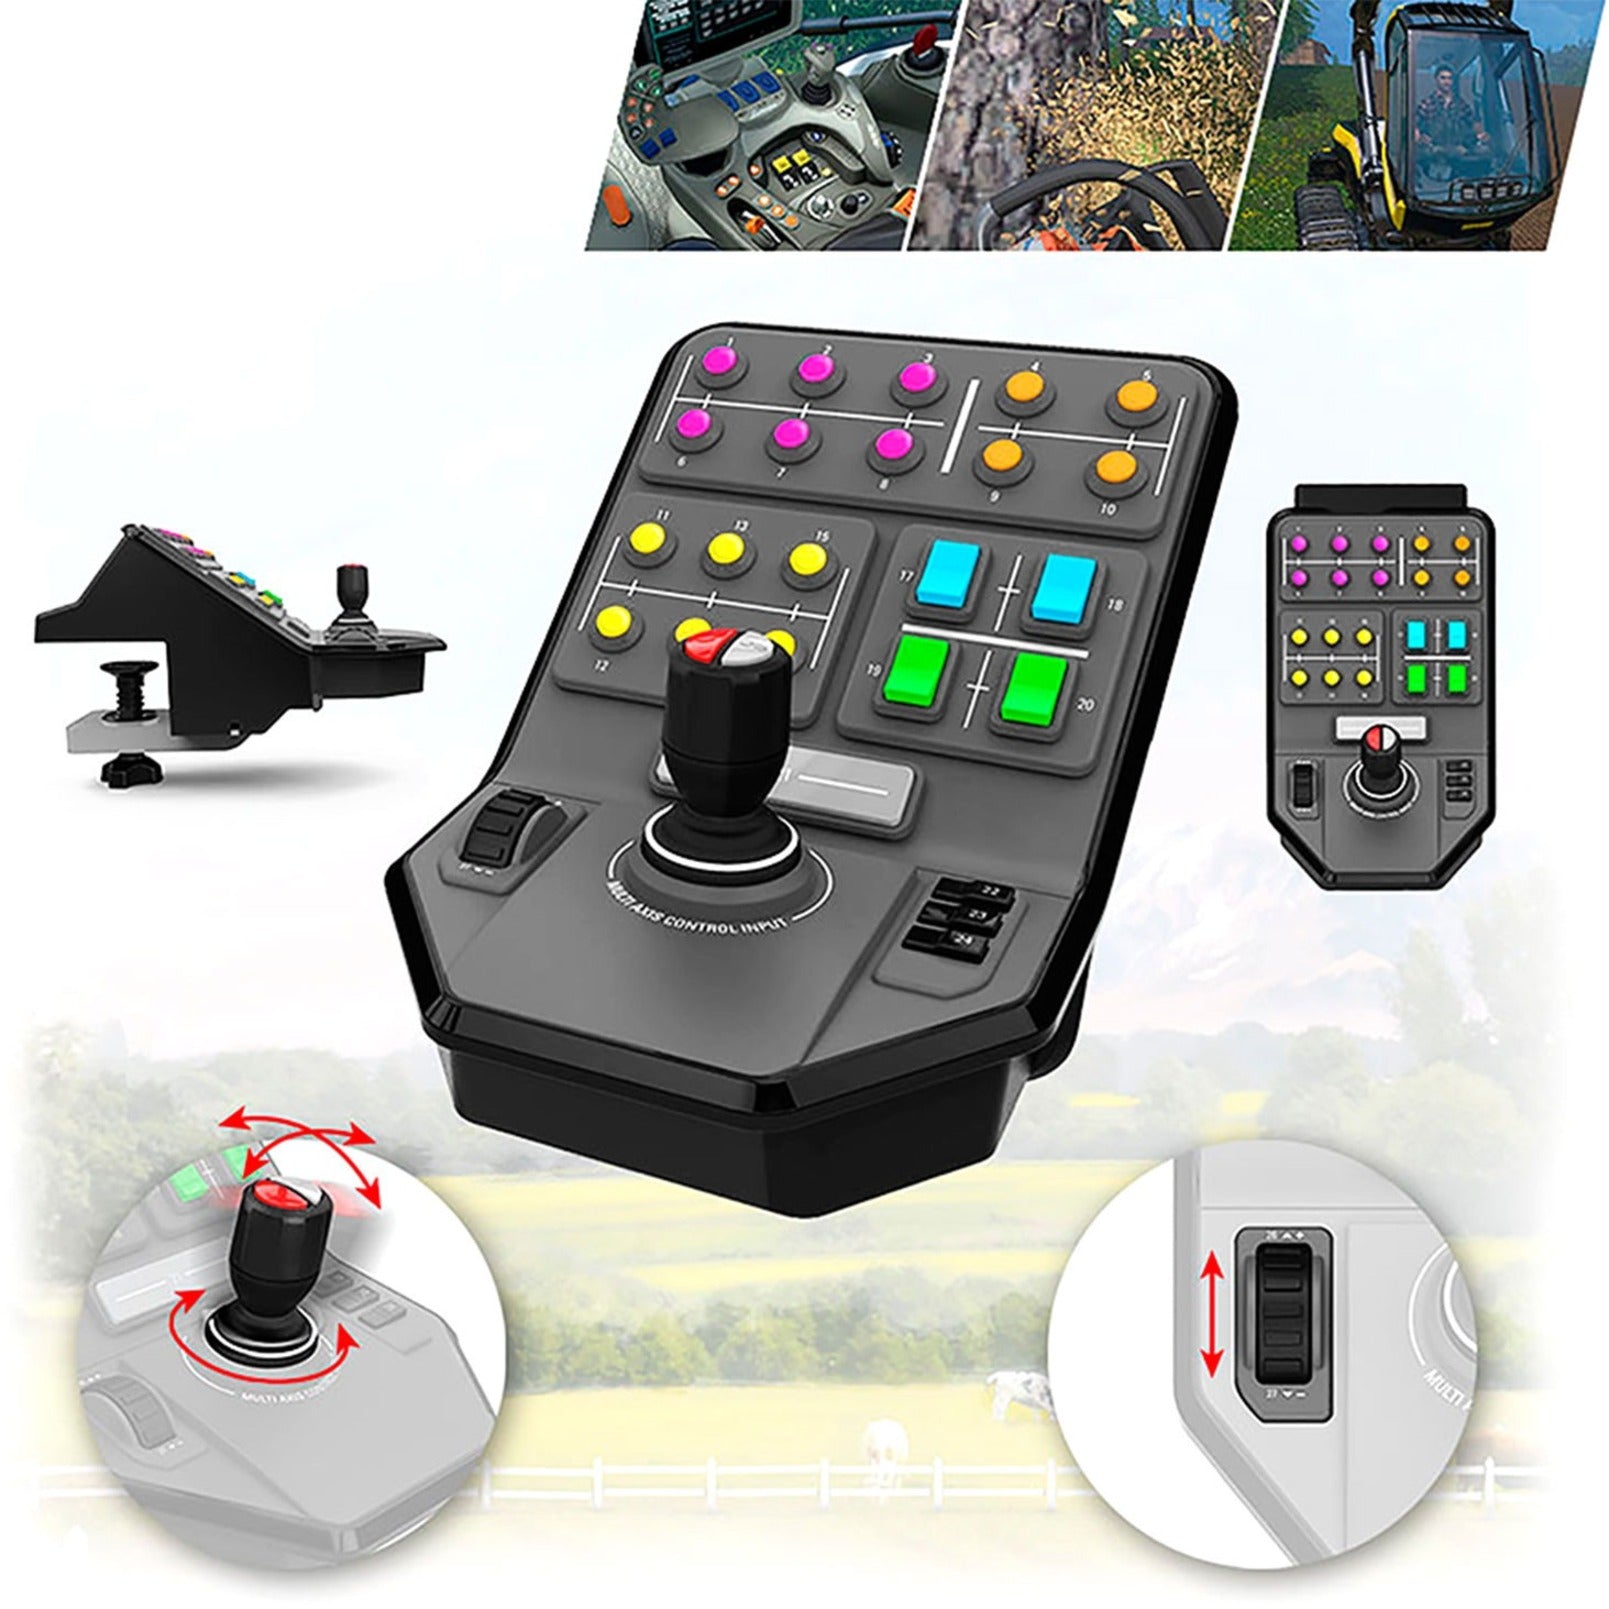 Logitech 945-000031 Heavy Equipment Side Panel Simulation Heavy Equipment Control Deck, USB Gaming Control Panel